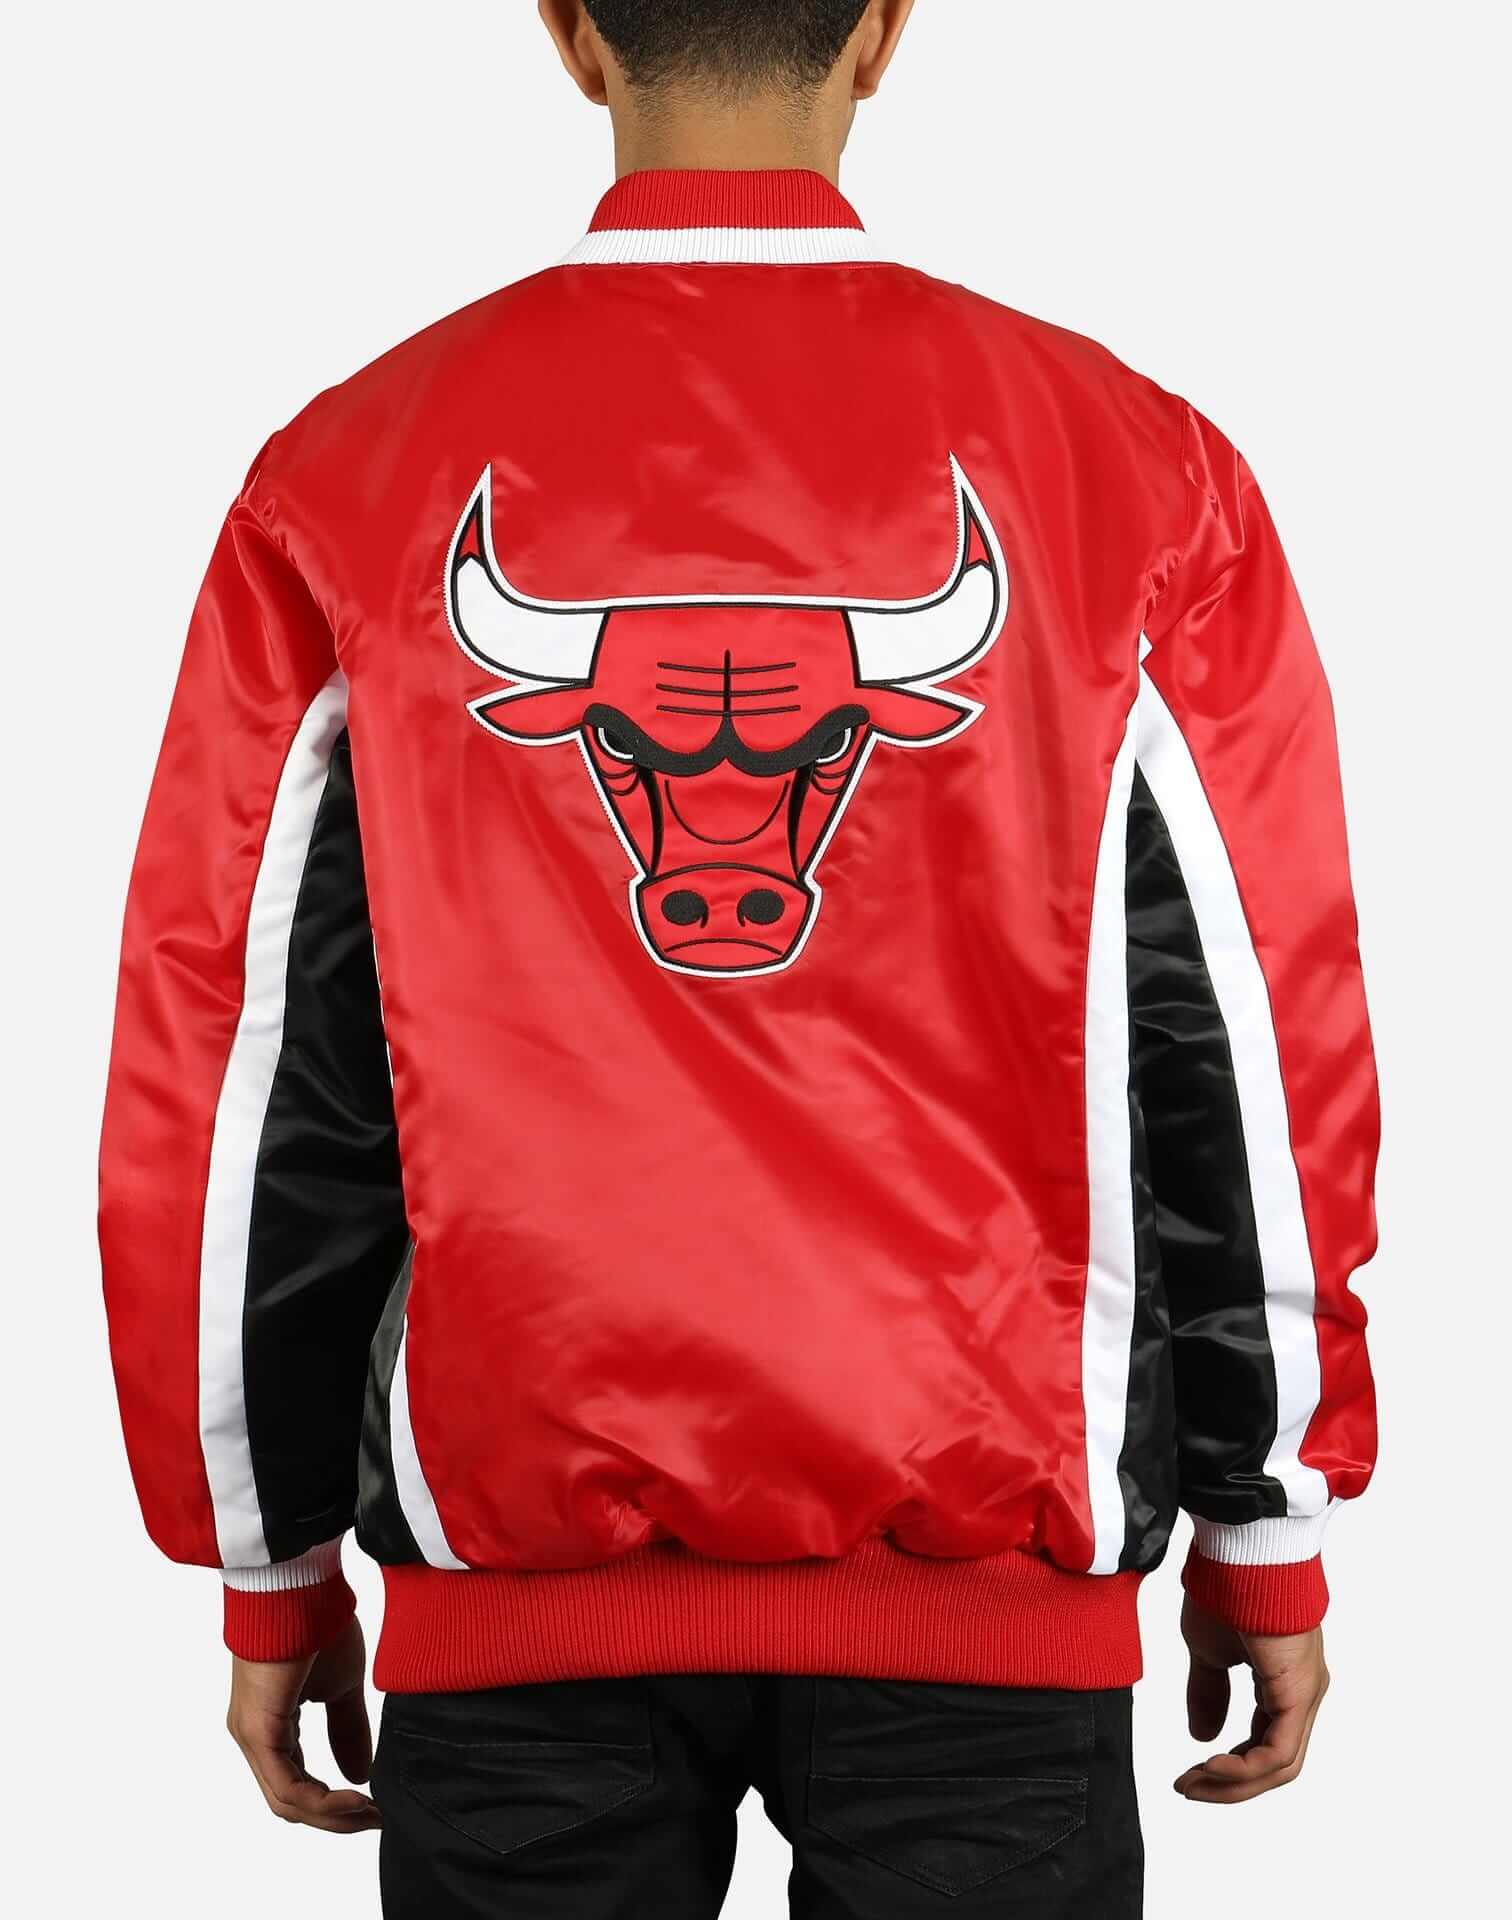 Vintage Chicago Bulls Starter Jacket 80s NBA Satin Bomber 